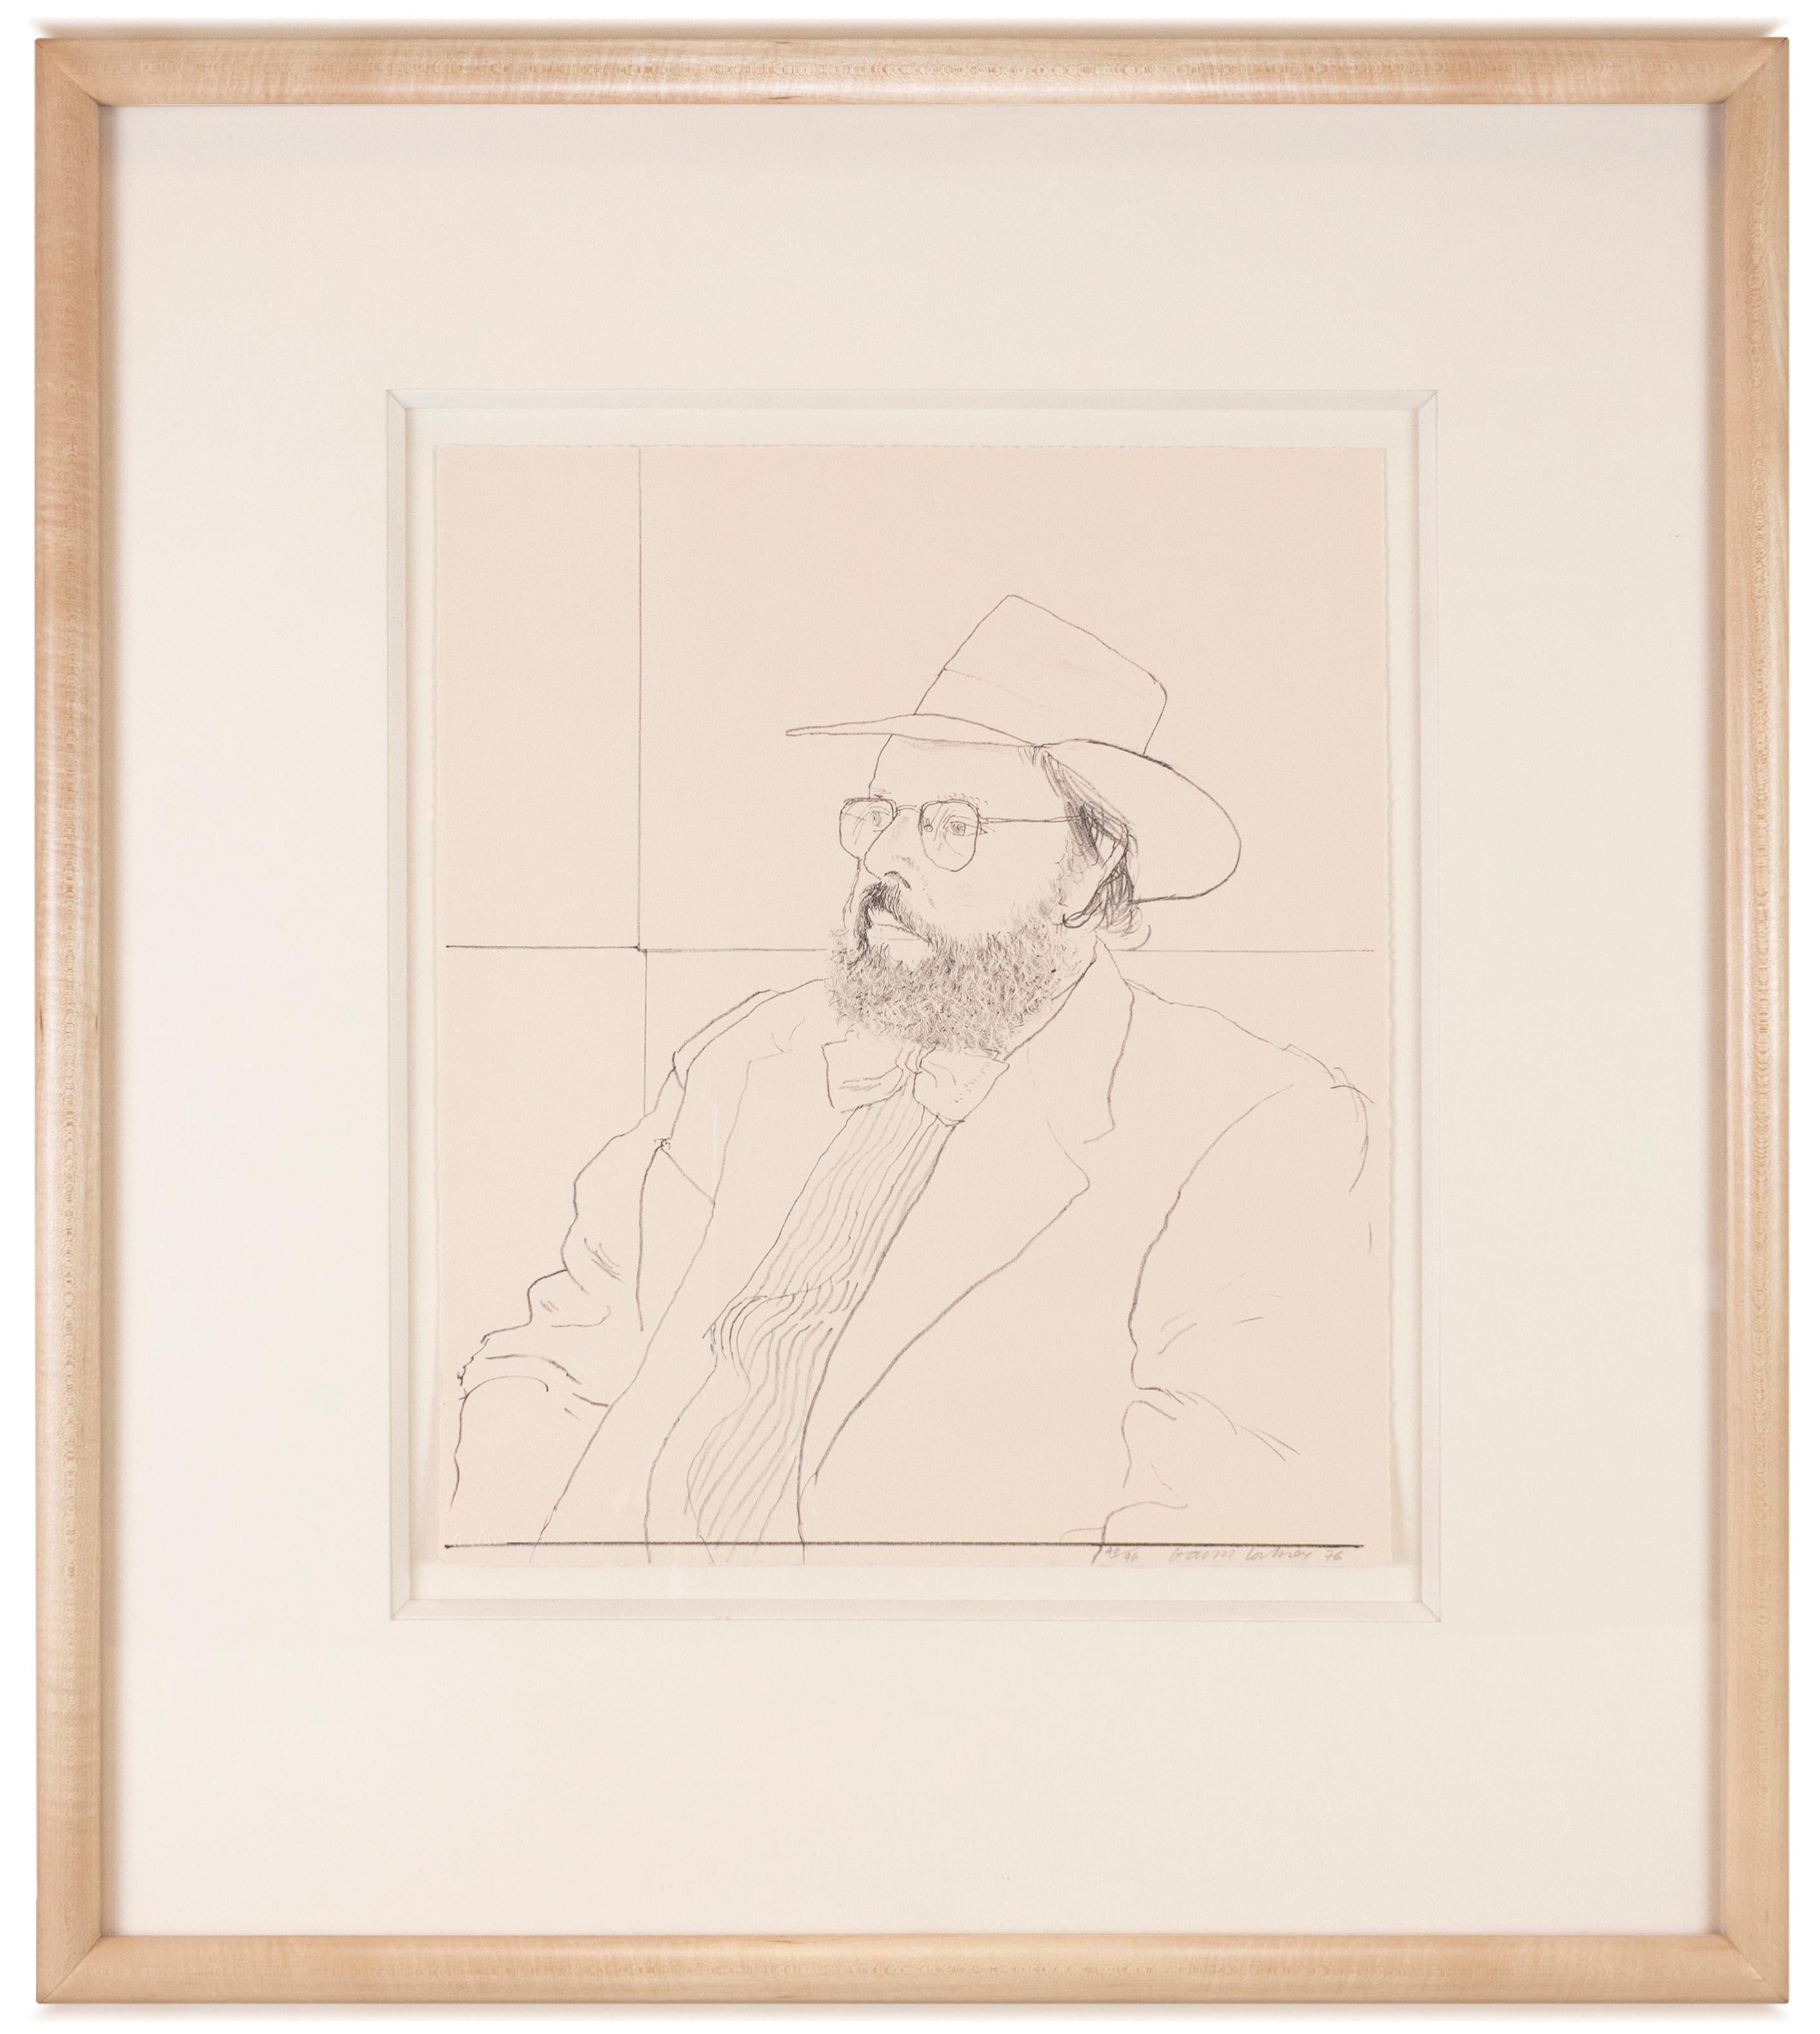 Henry Geldzahler with Hat: framed black and white portrait by David Hockney 1